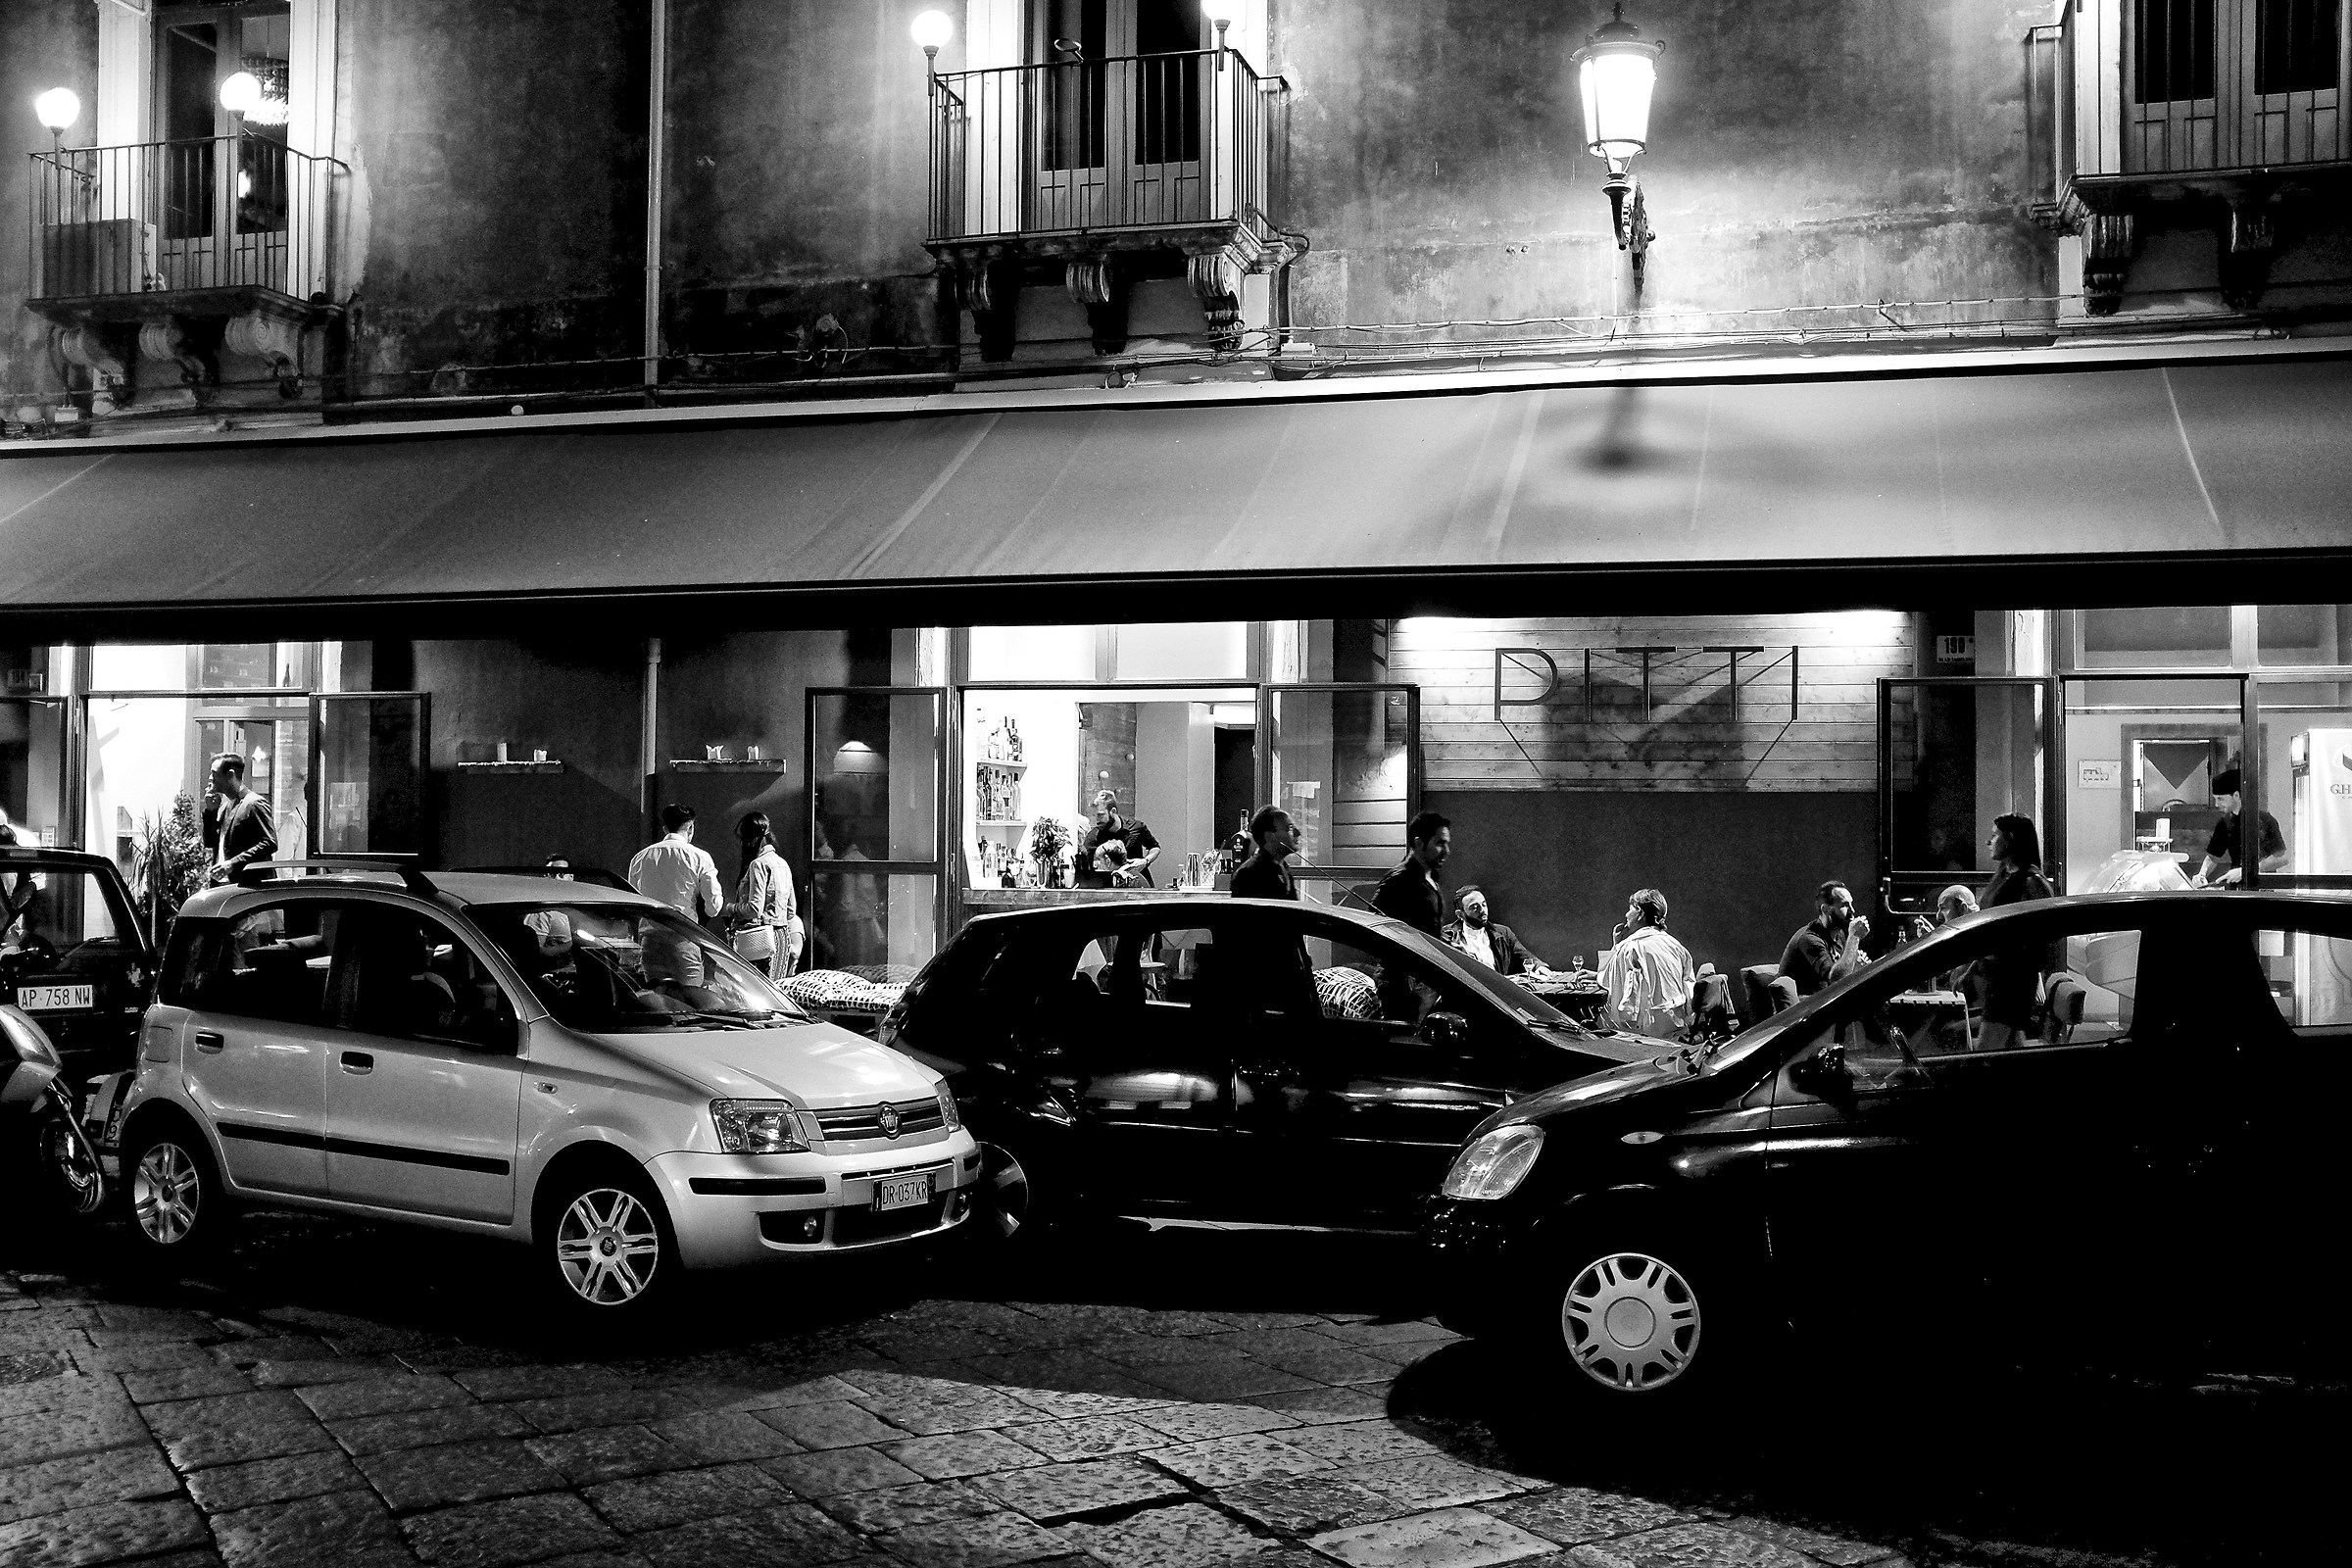 One night in Catania...